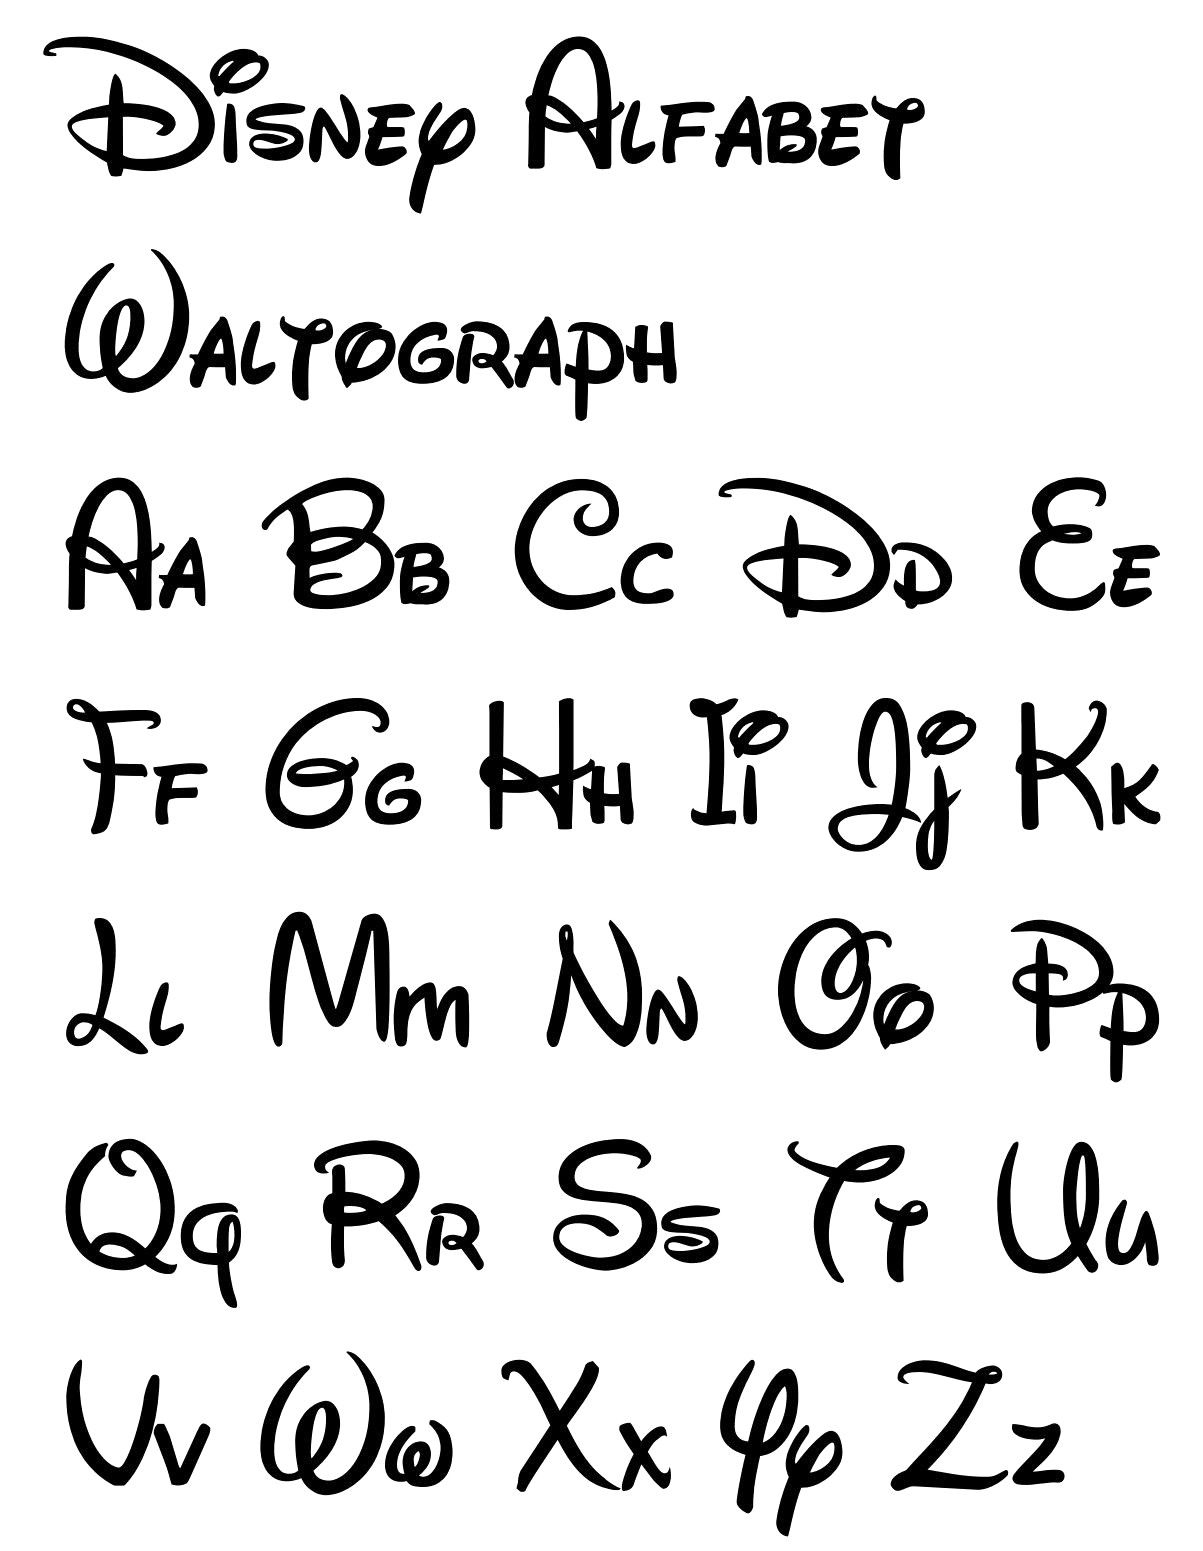 Free Printable Disney Letter Stencils | Disney | Pinterest - Free Printable Disney Alphabet Letters